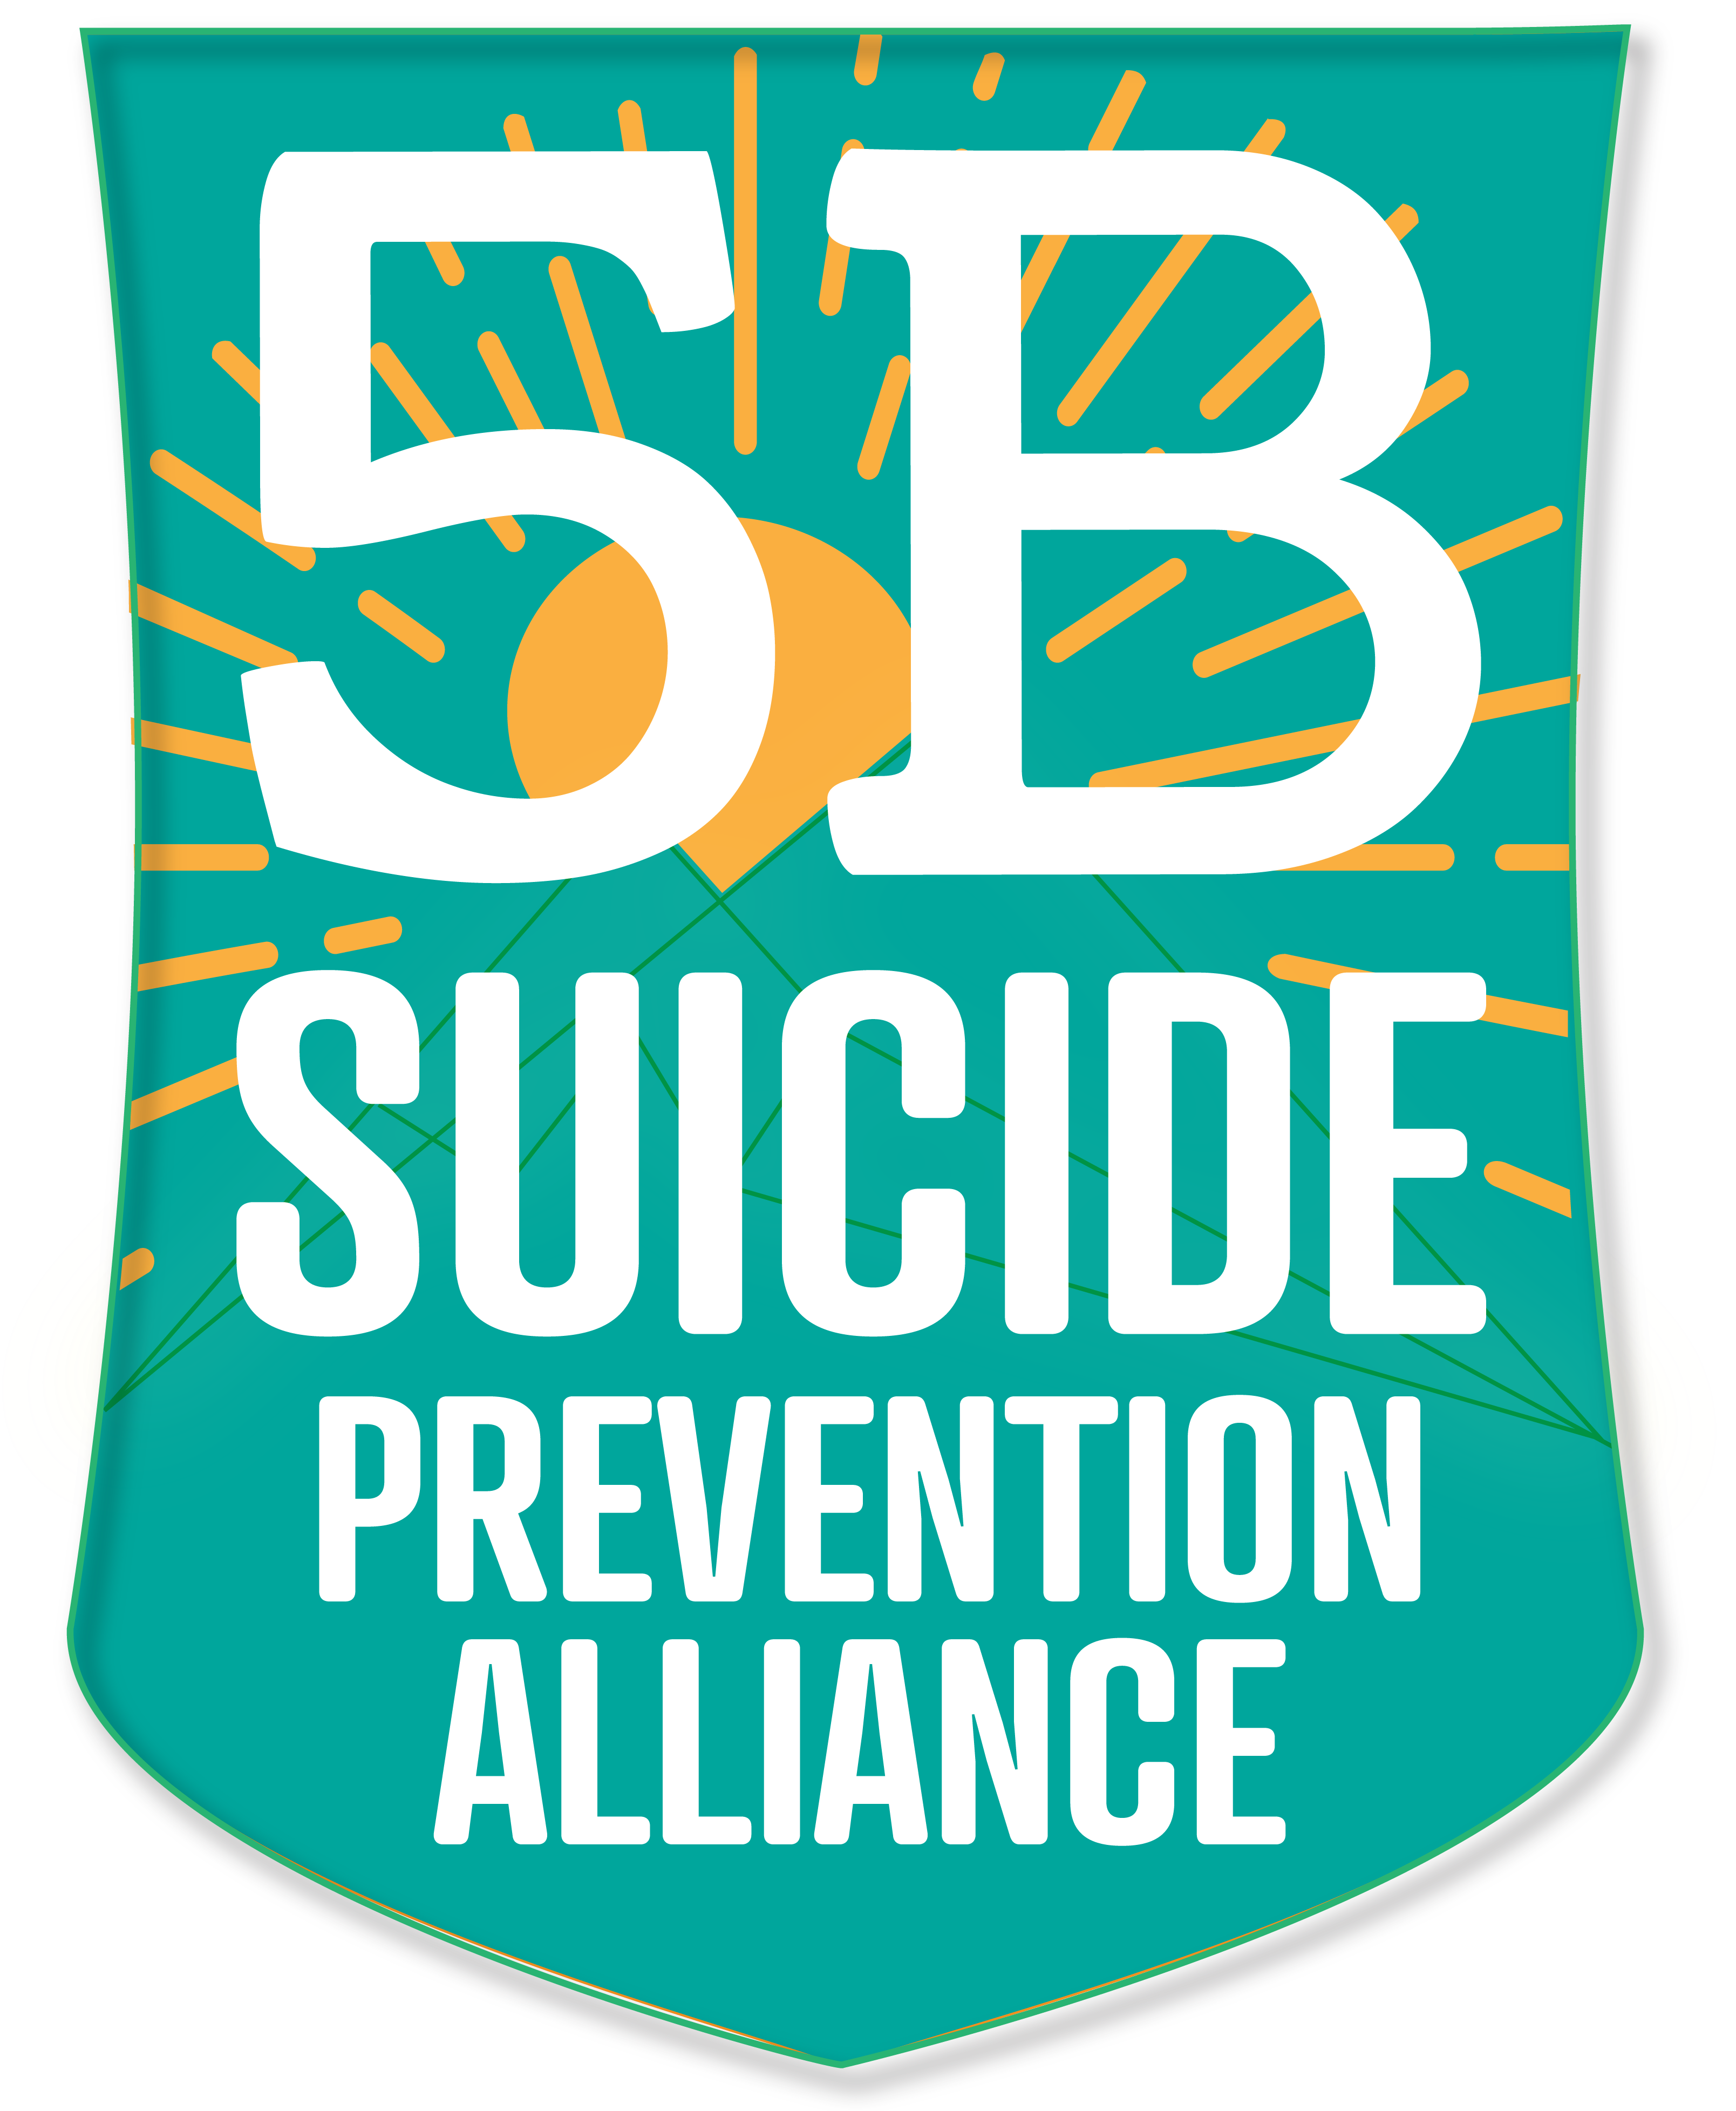 5B Suicide Prevention Alliance Logo